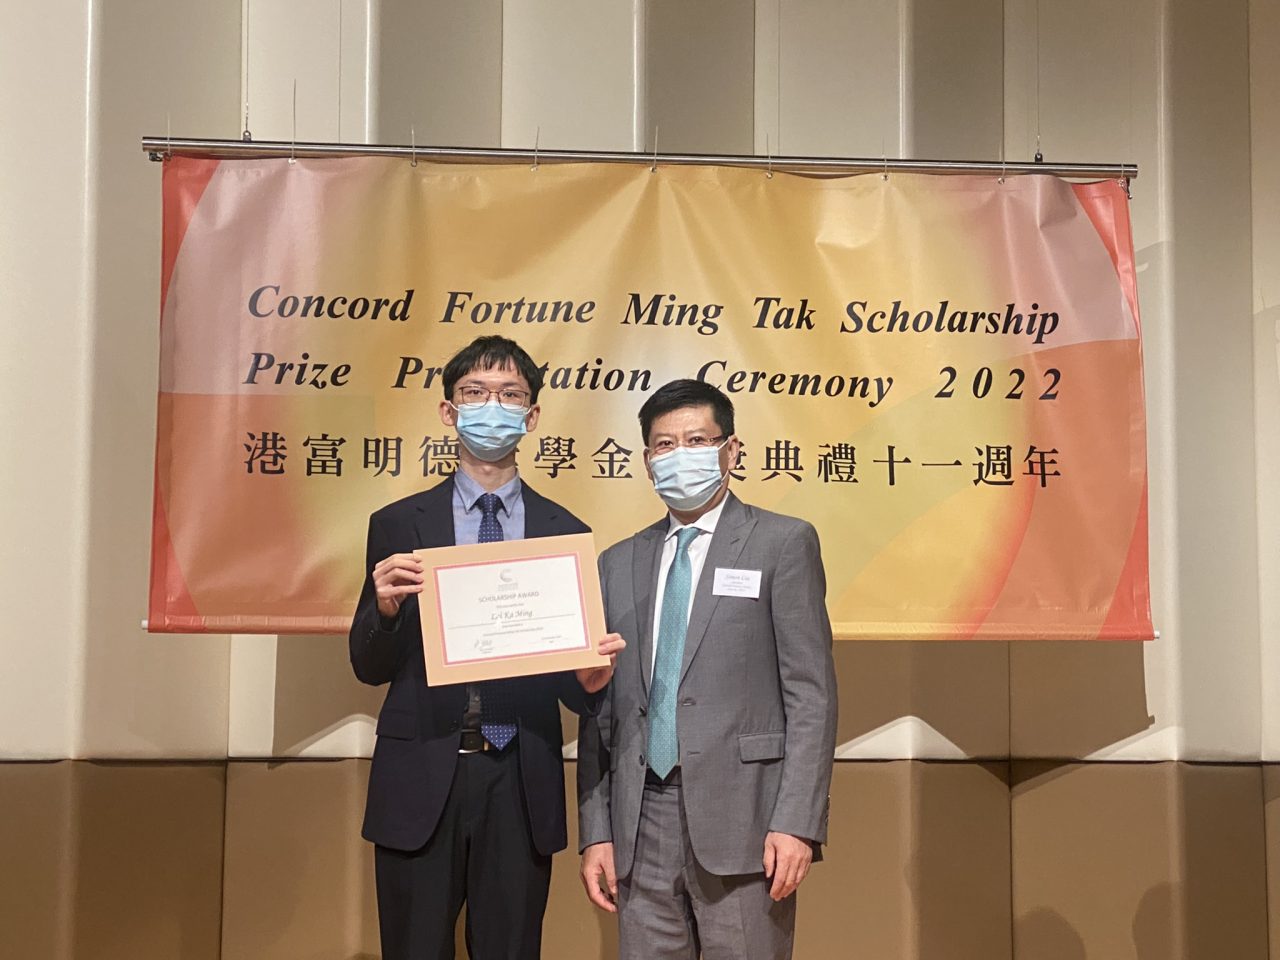 Concord Fortune Ming Tak Scholarship Prize Presentation Ceremony 2022